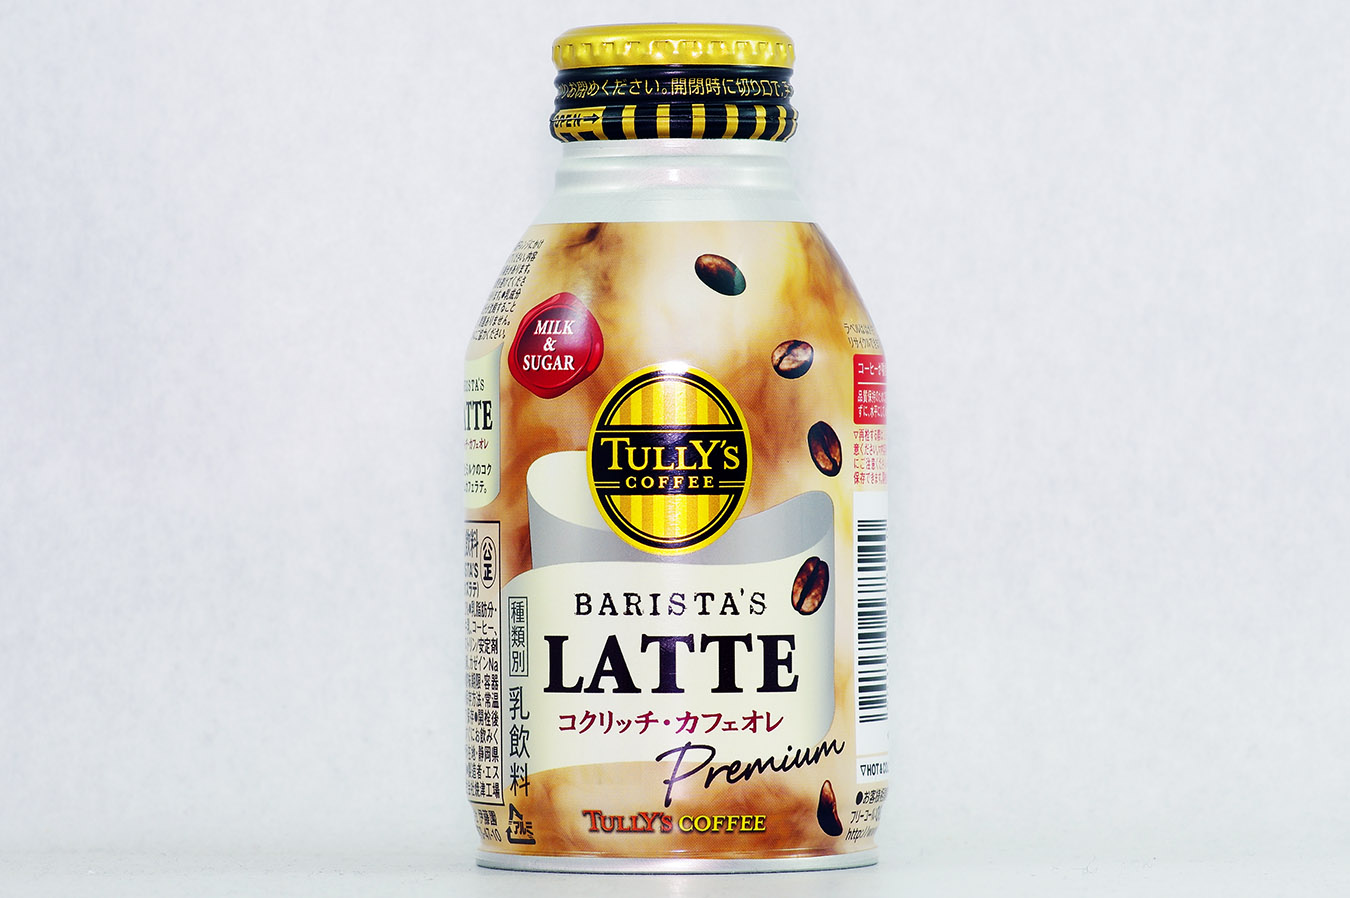 TULLY'S COFFEE BARISTA'S LATTE コクリッチ・カフェオレ 2016年